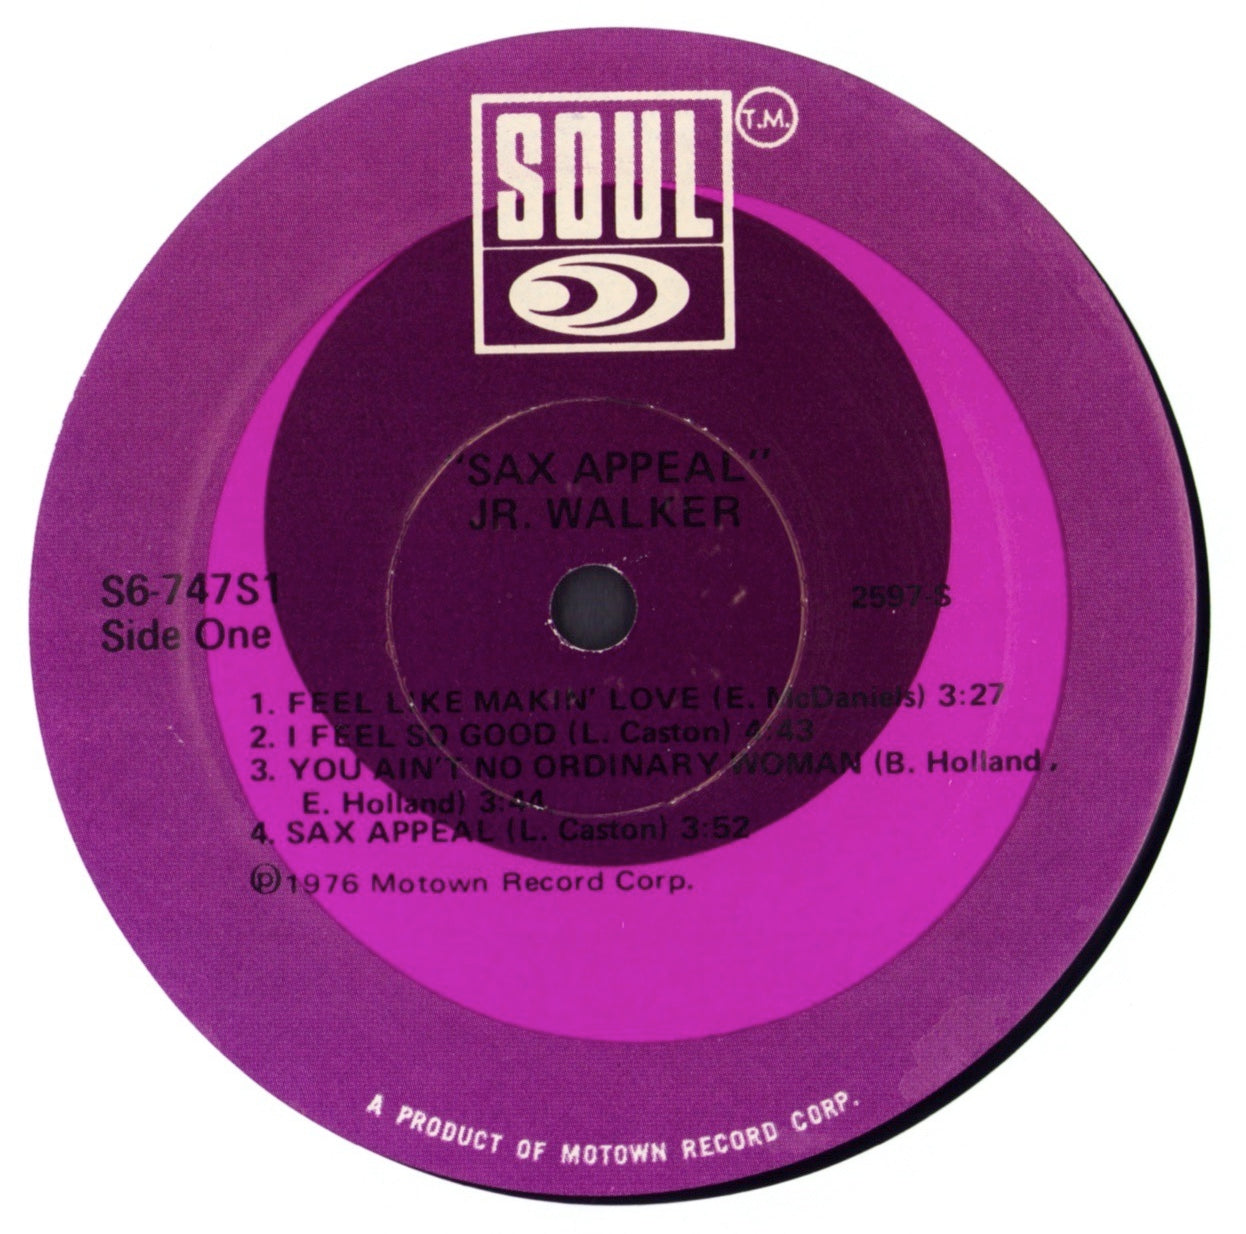 Jr. Walker - Sax Appeal Vinyl LP